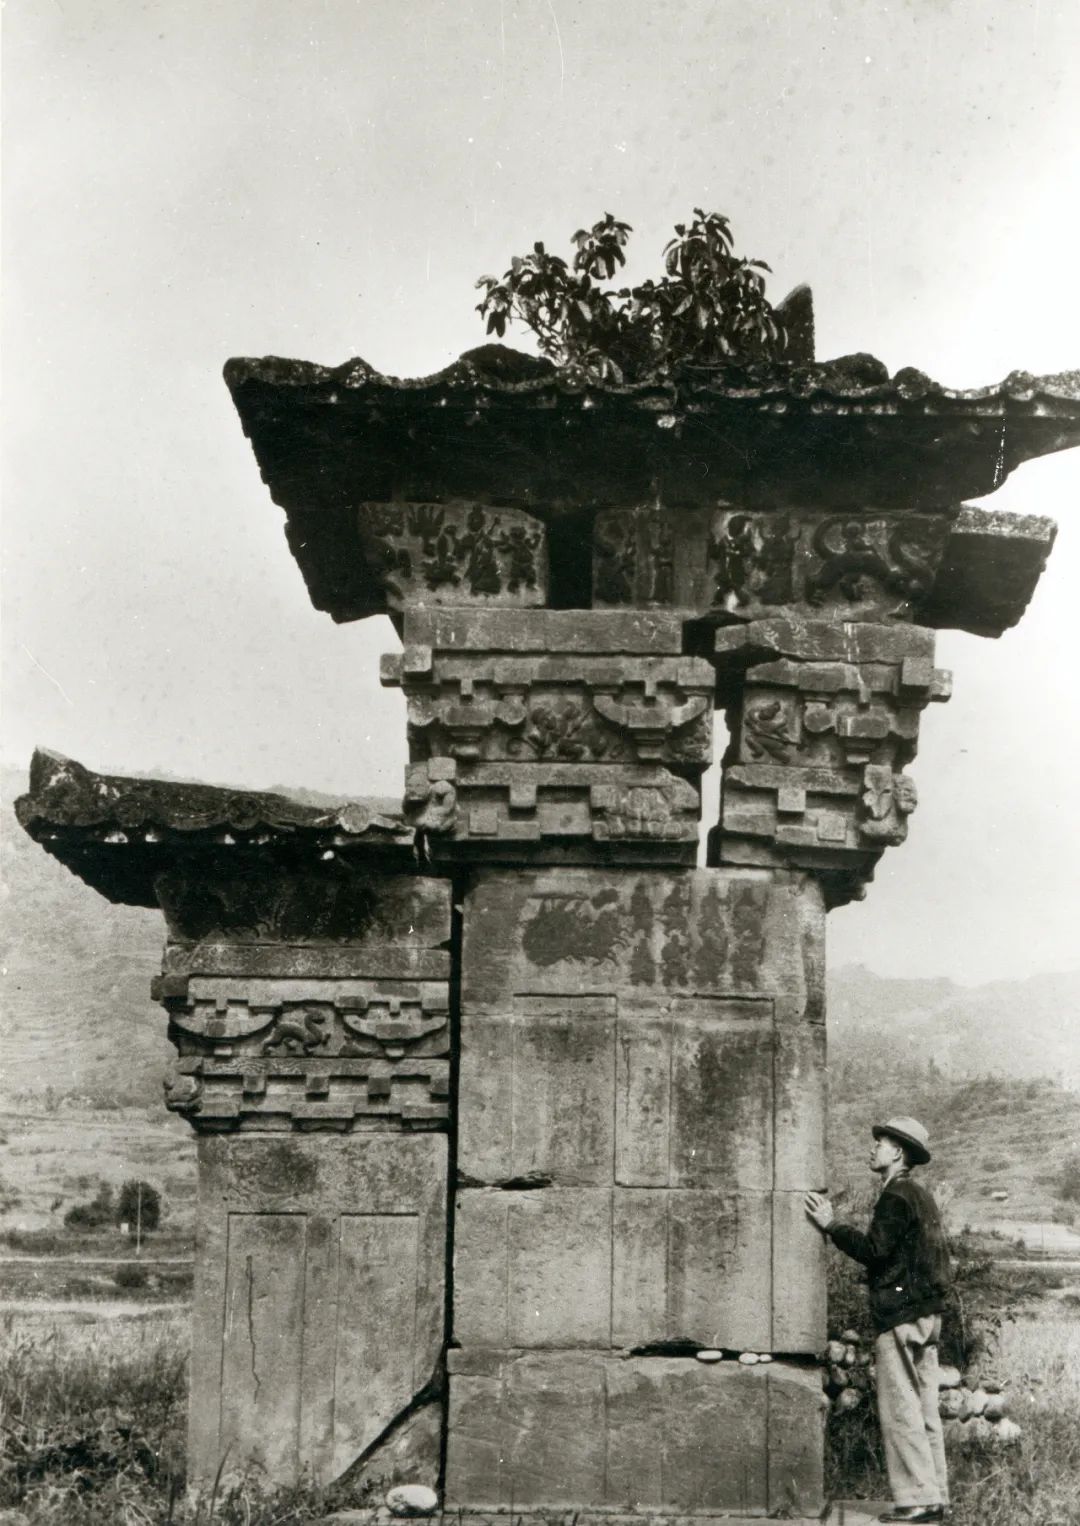 Tsinghua exhibition memorializes architectural legend